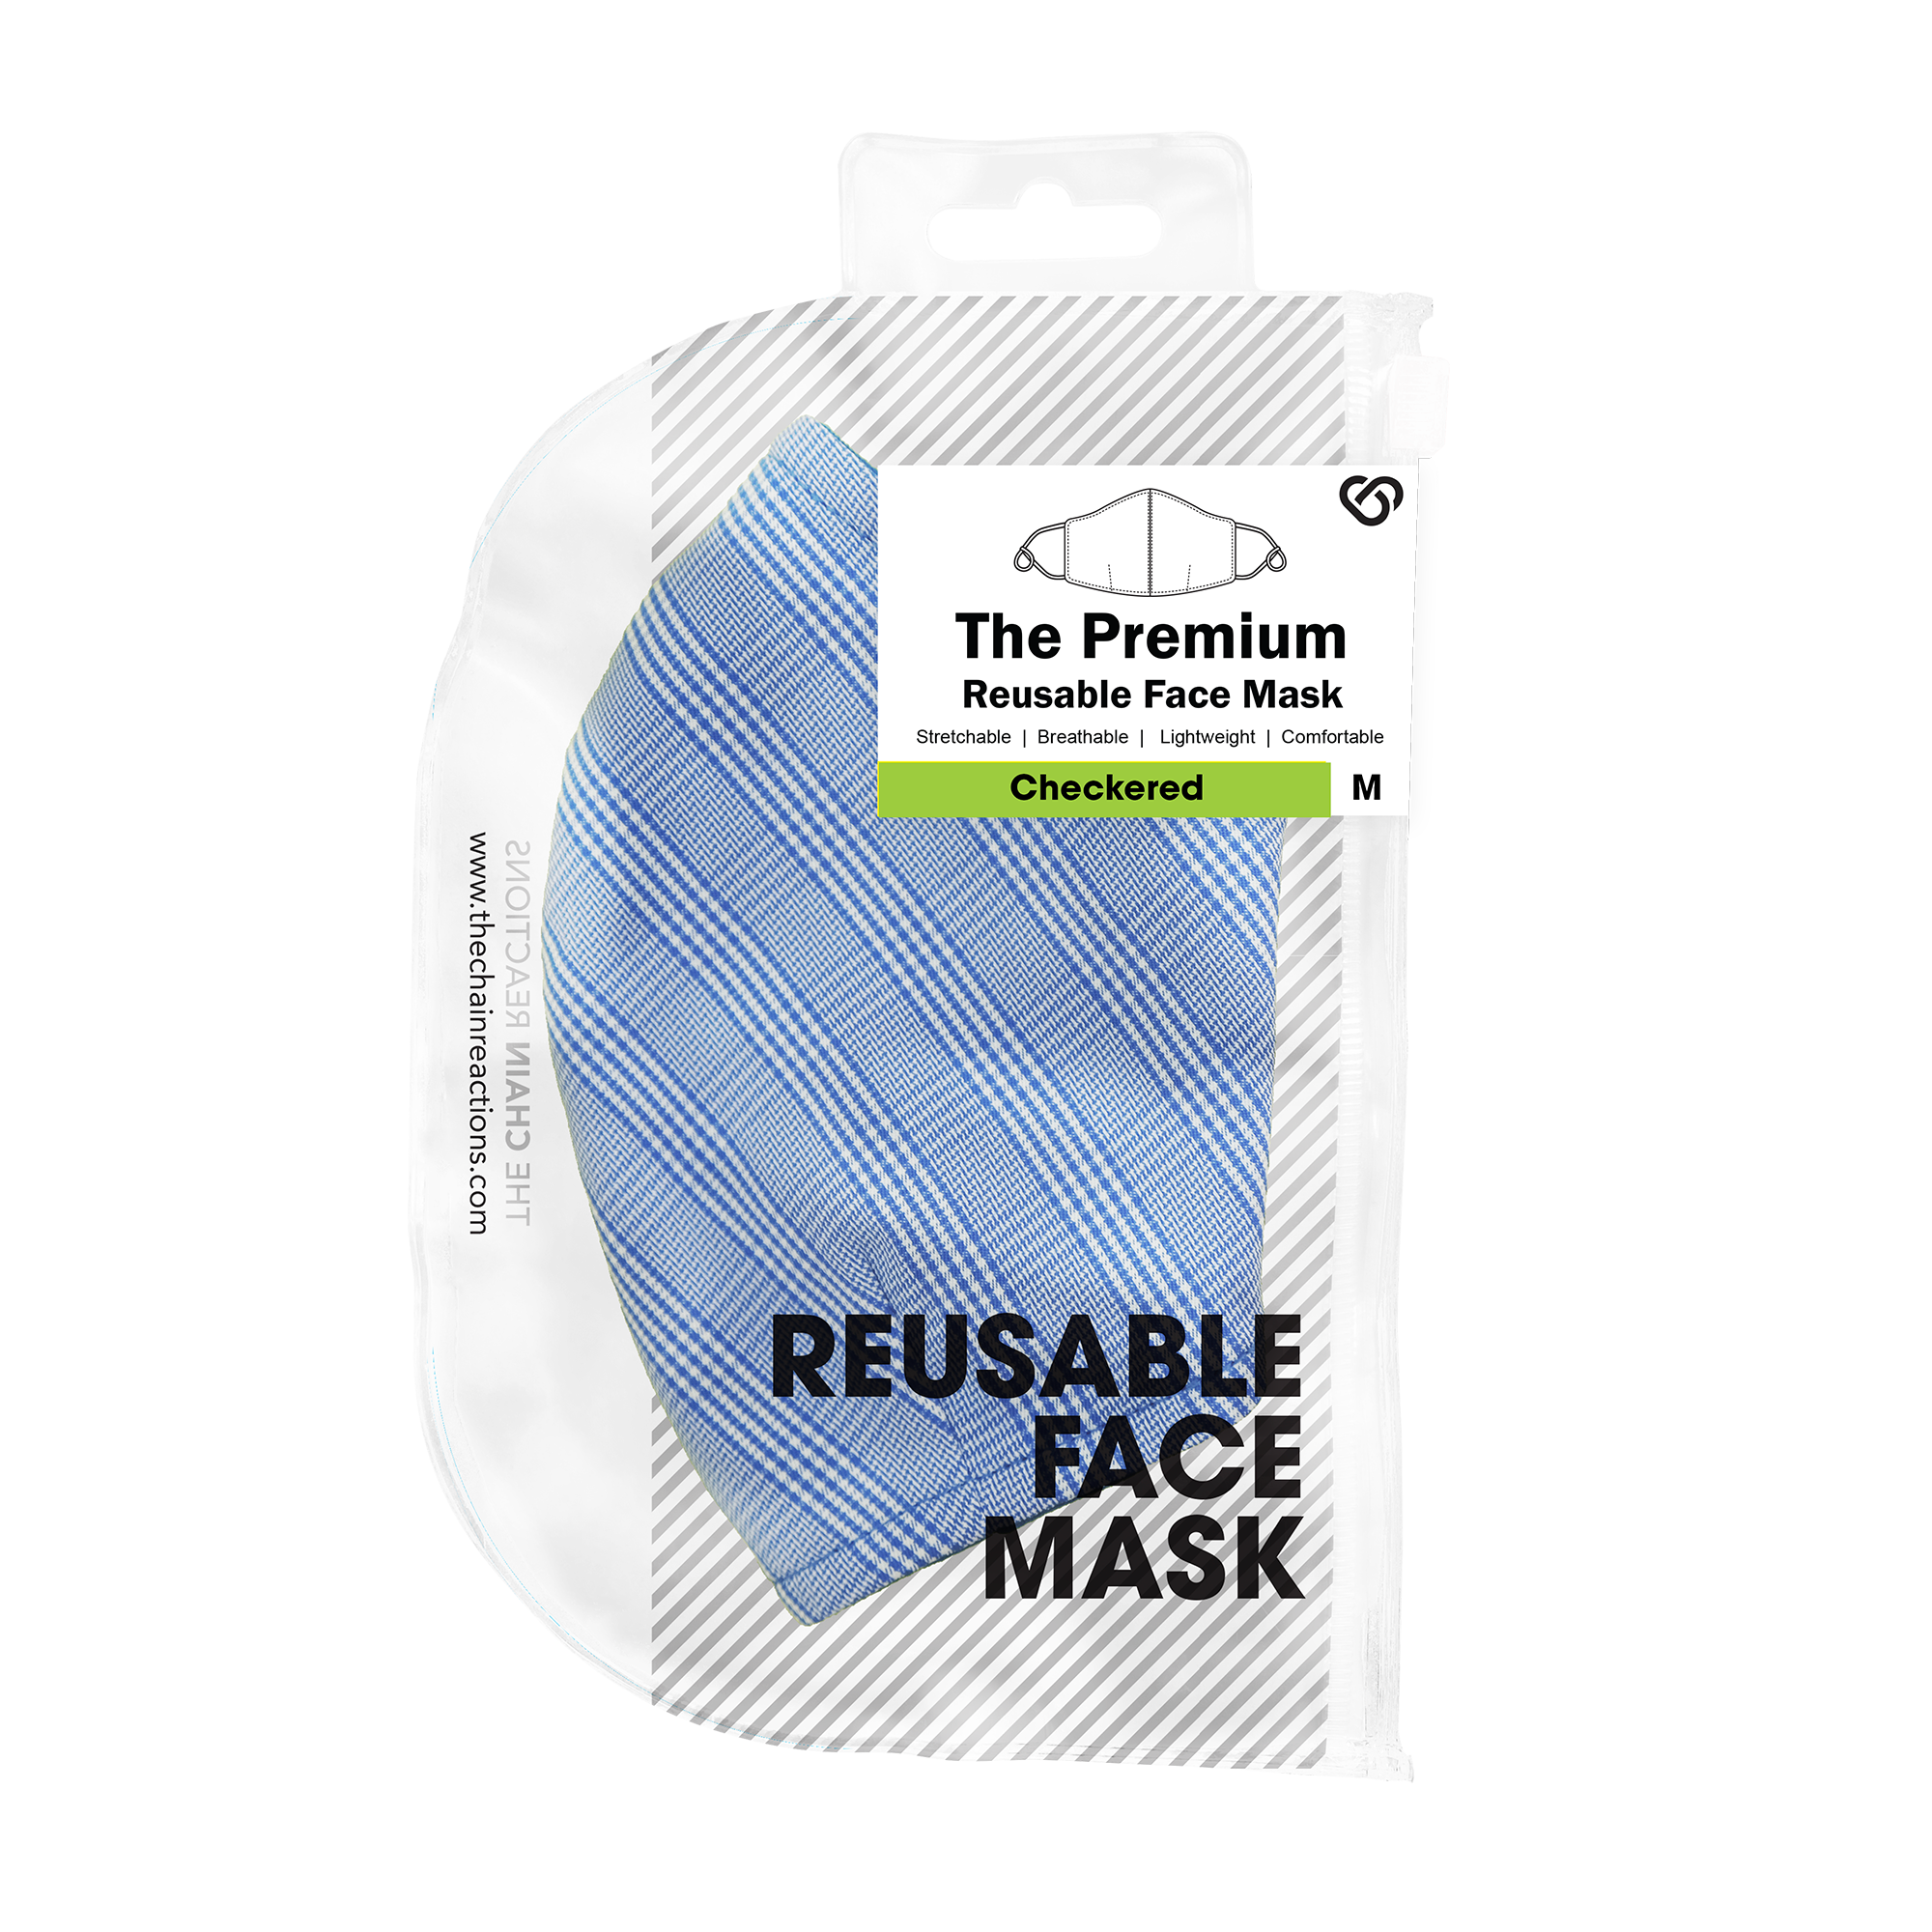 The Premium Reusable Face Mask in Glen Check Blue